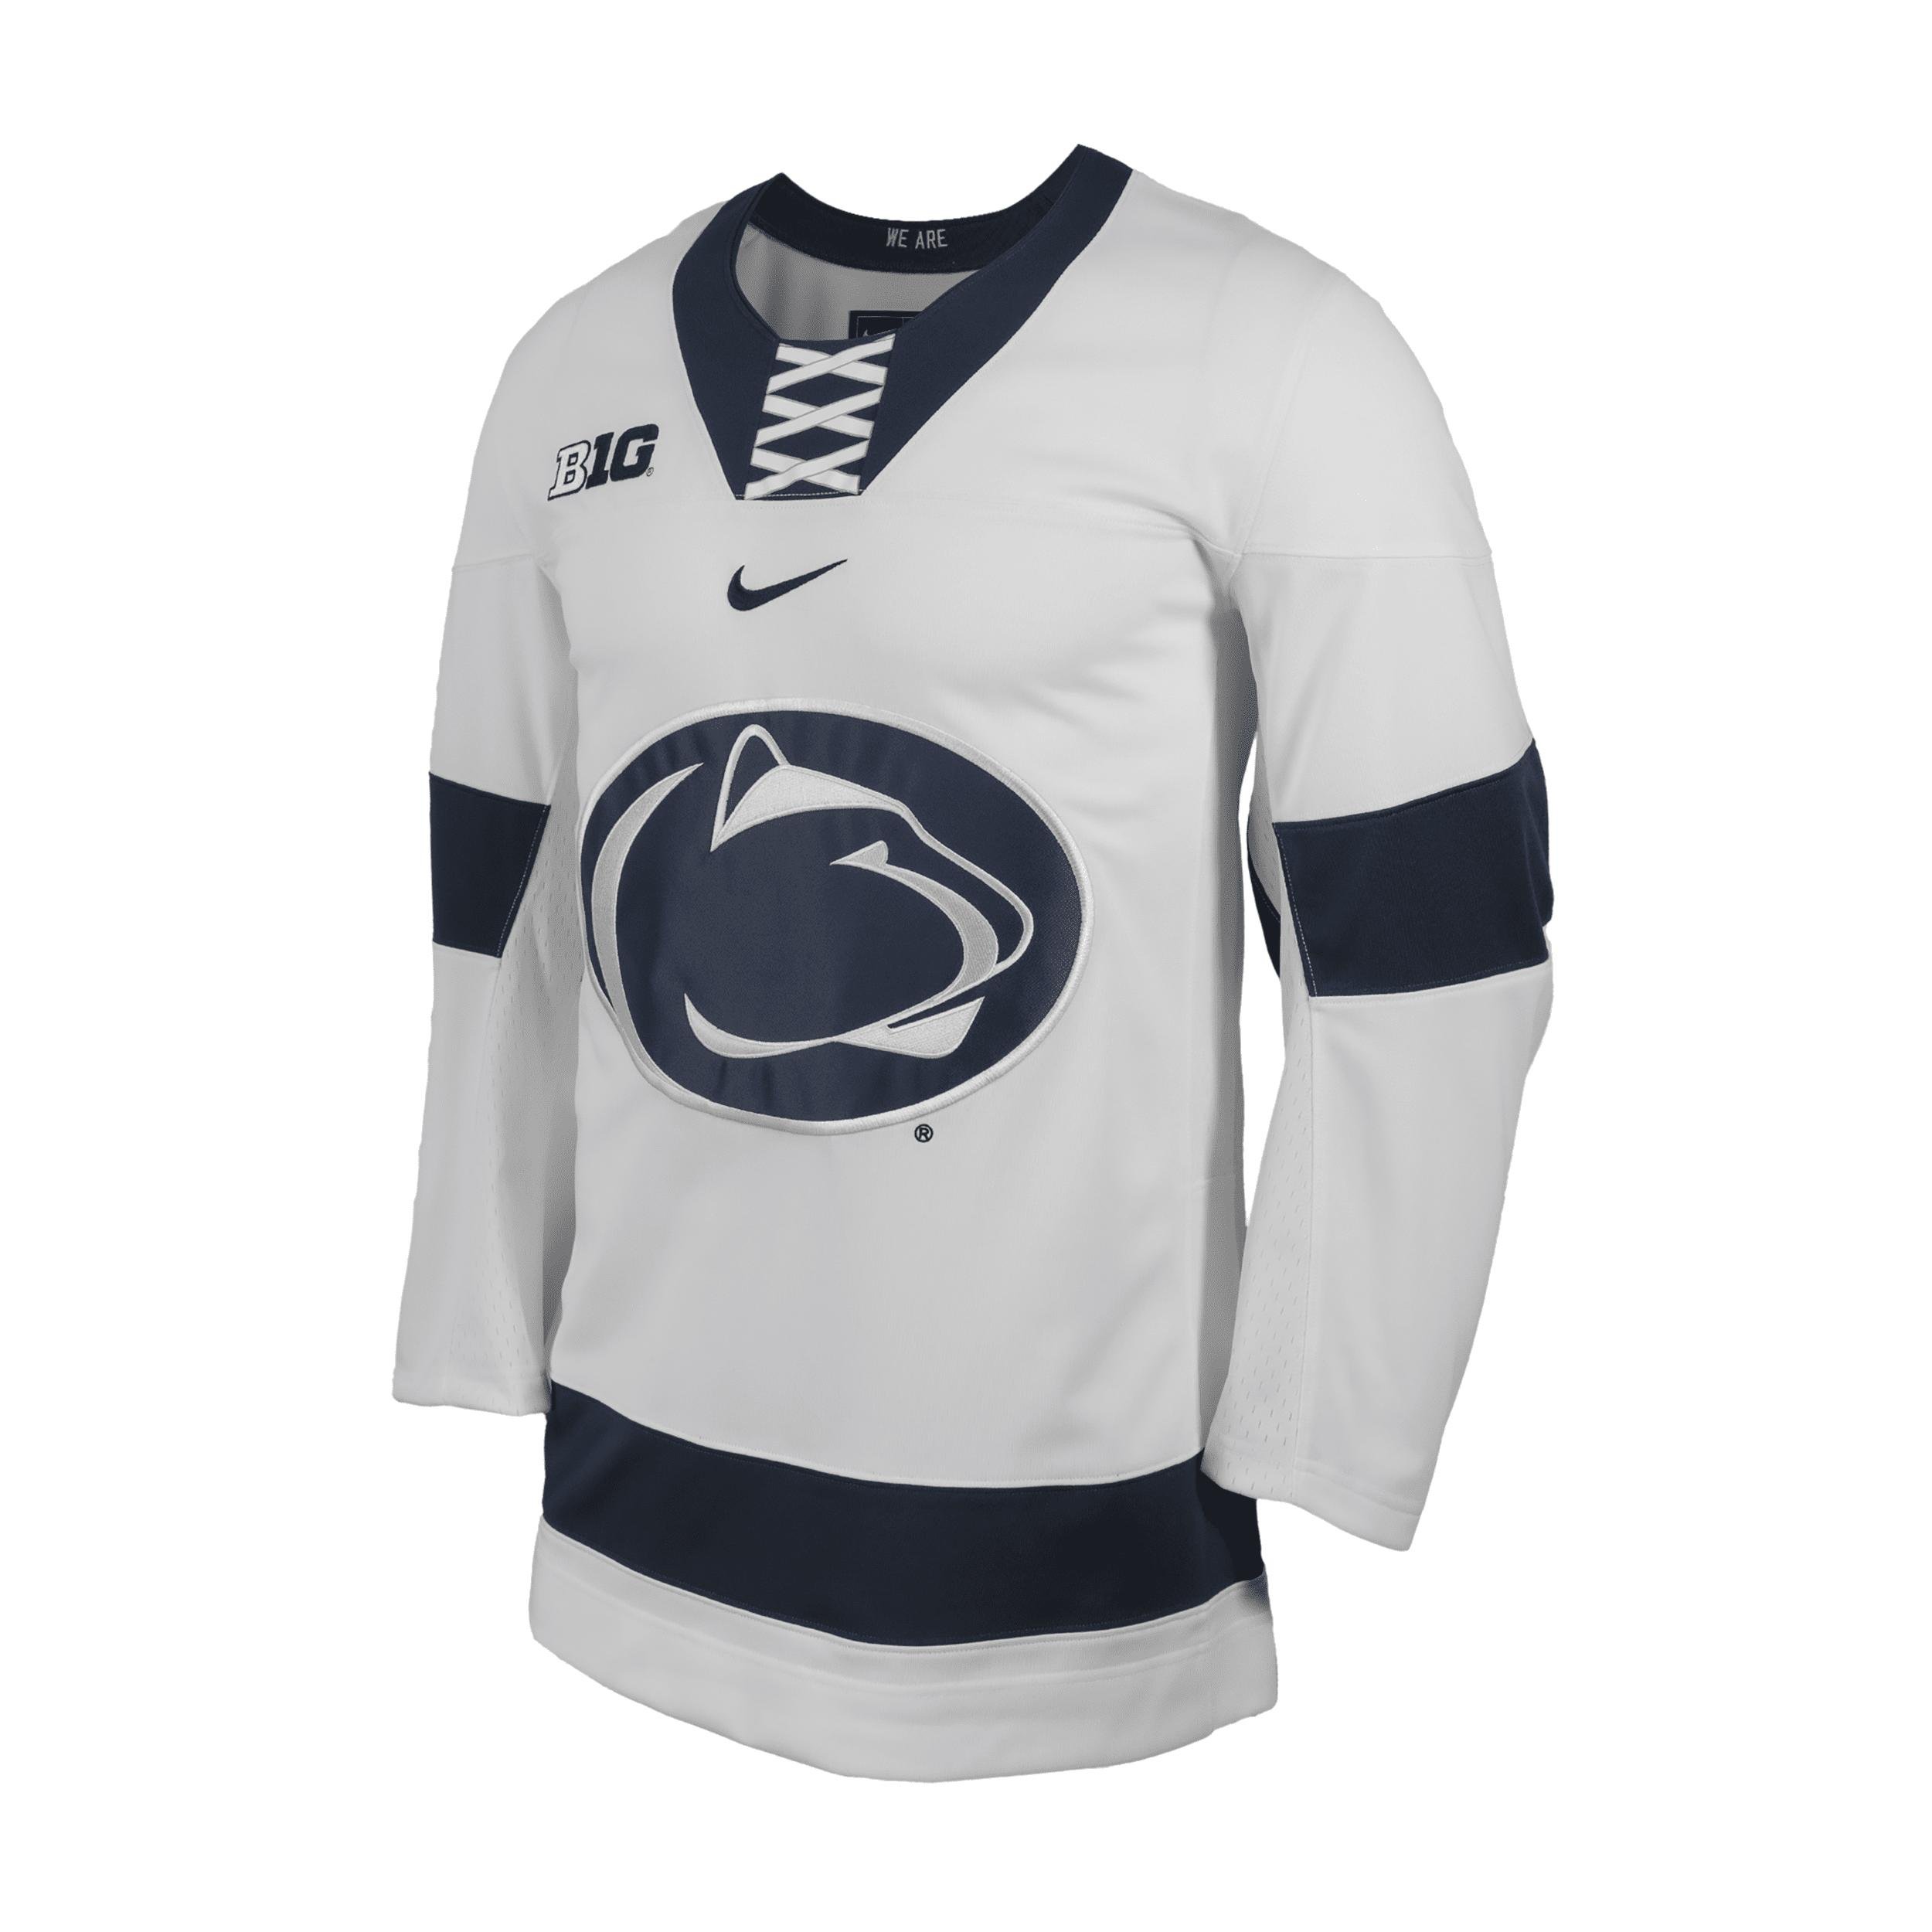 Penn State Nike Unisex College Hockey Jersey by NIKE